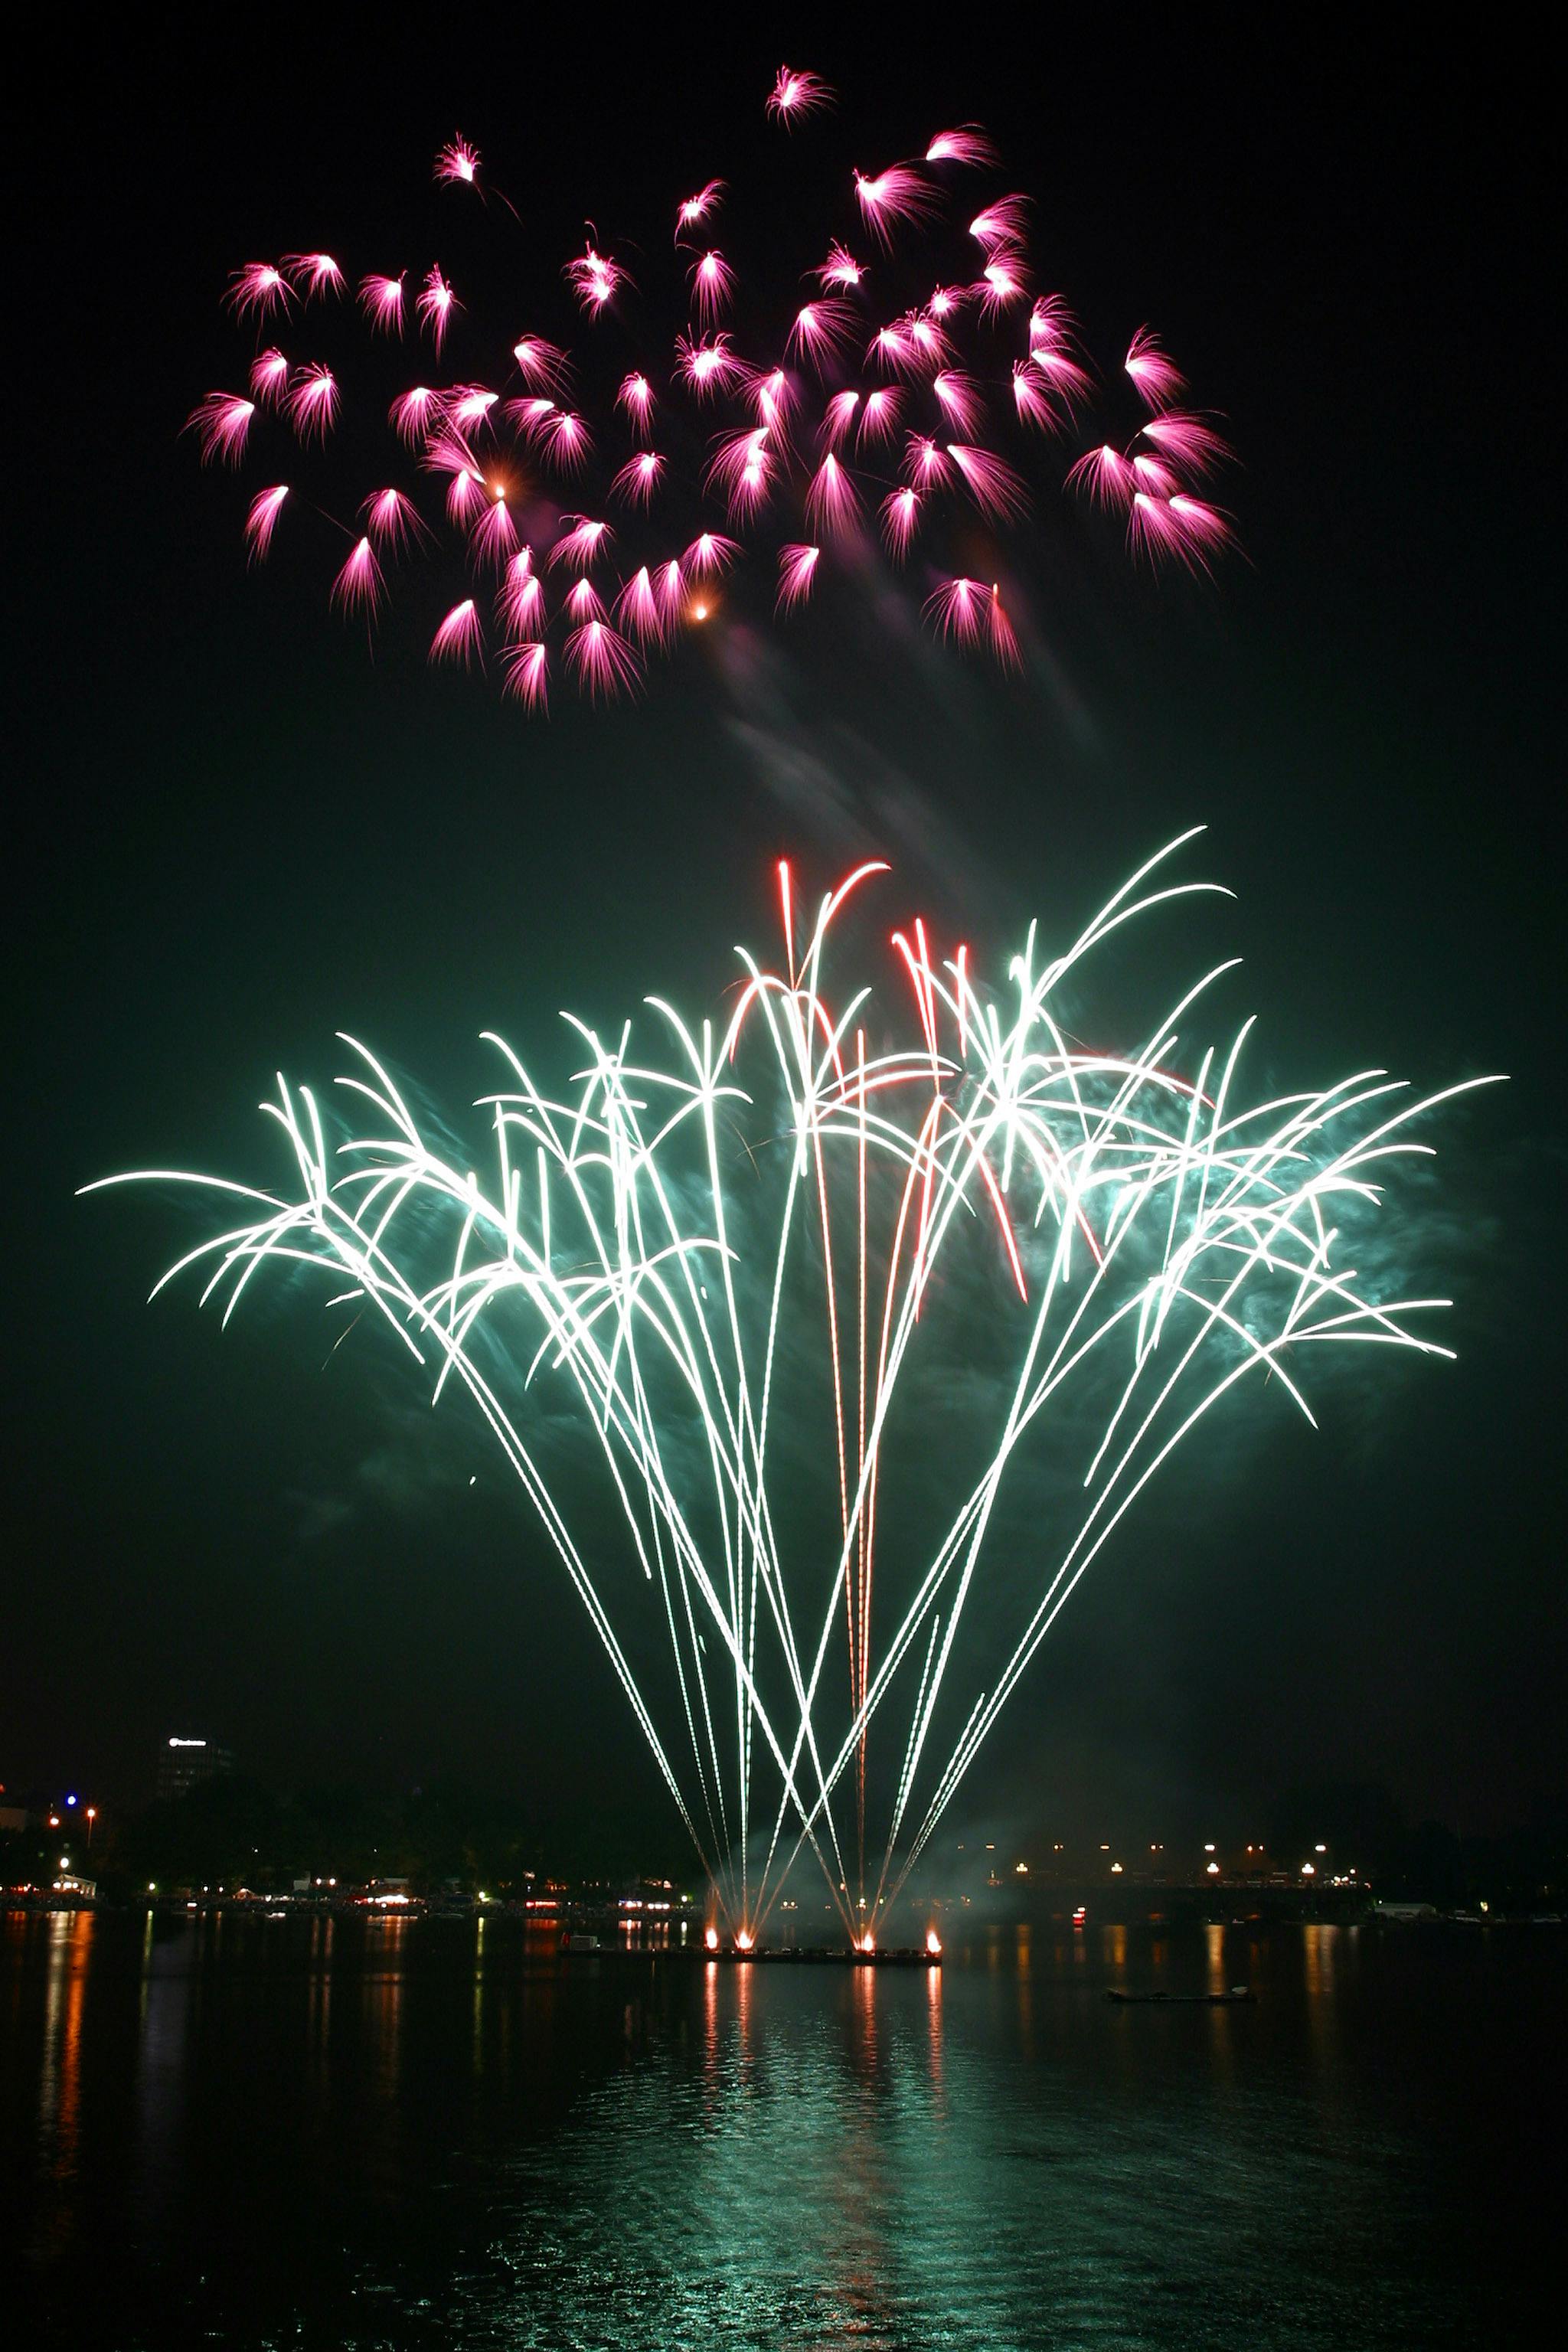 Fireworks Display during Nighttime · Free Stock Photo